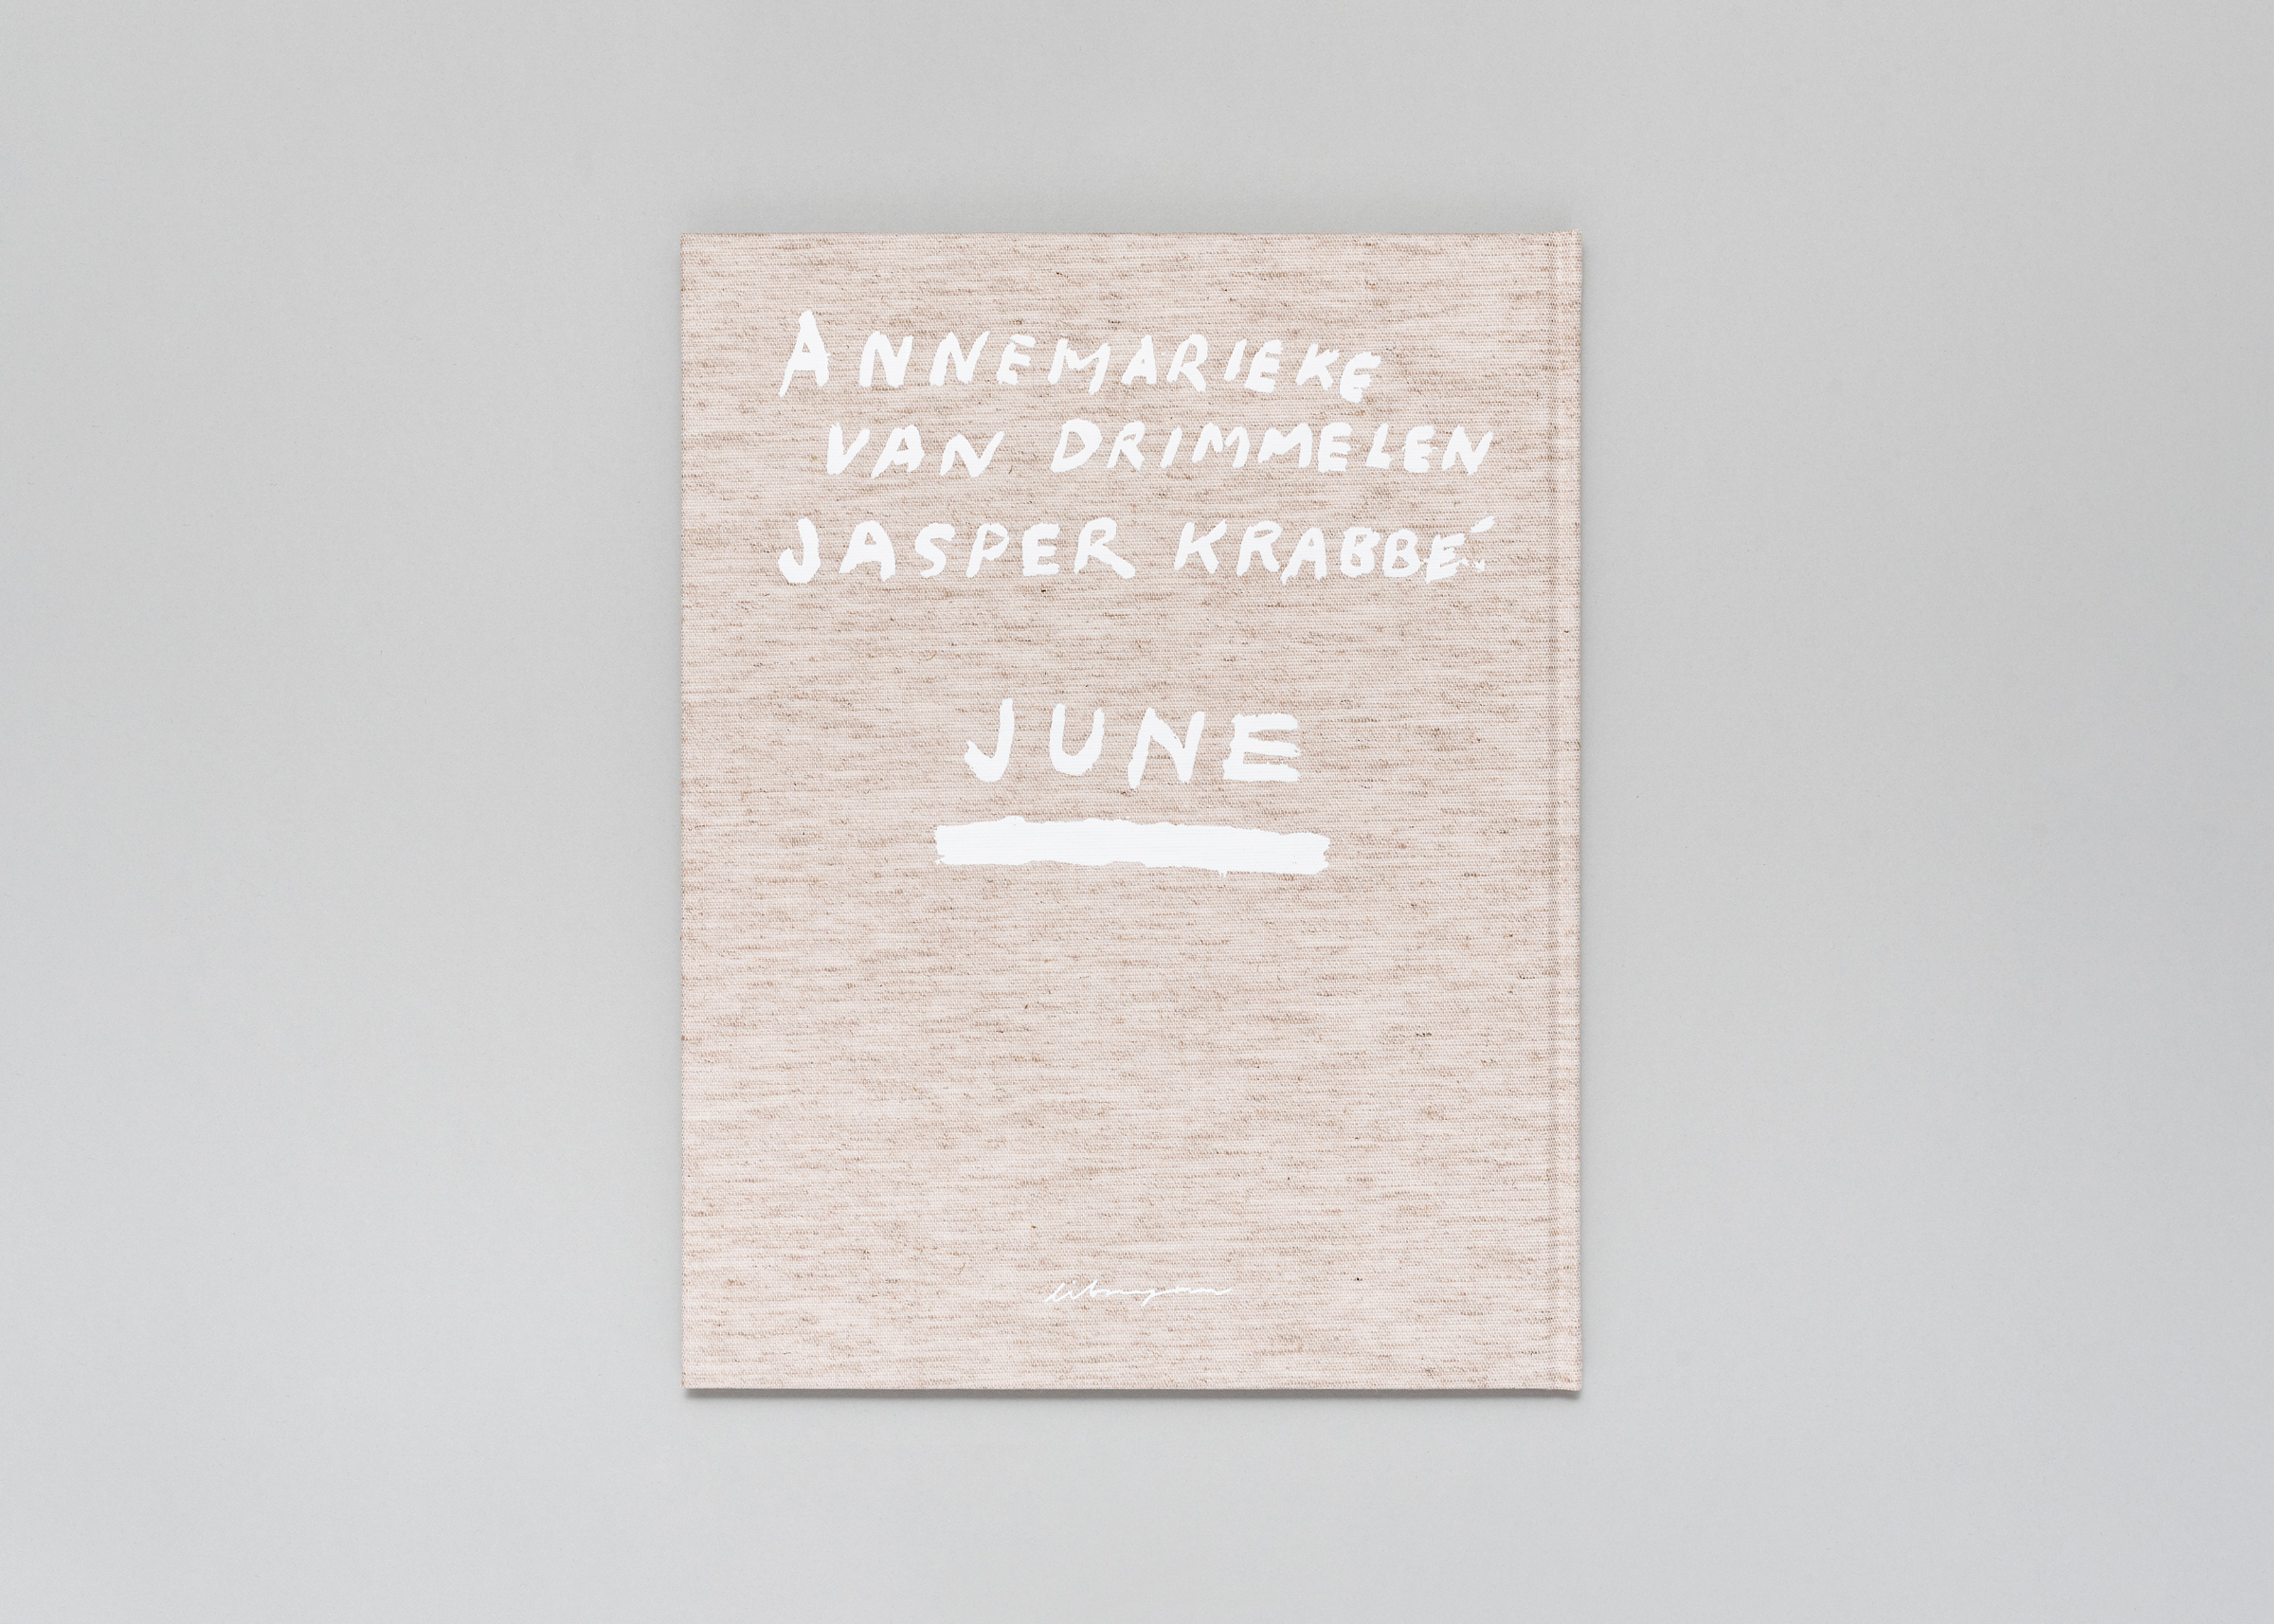 Annemarieke van Drimmelen & Jasper Krabbé — June